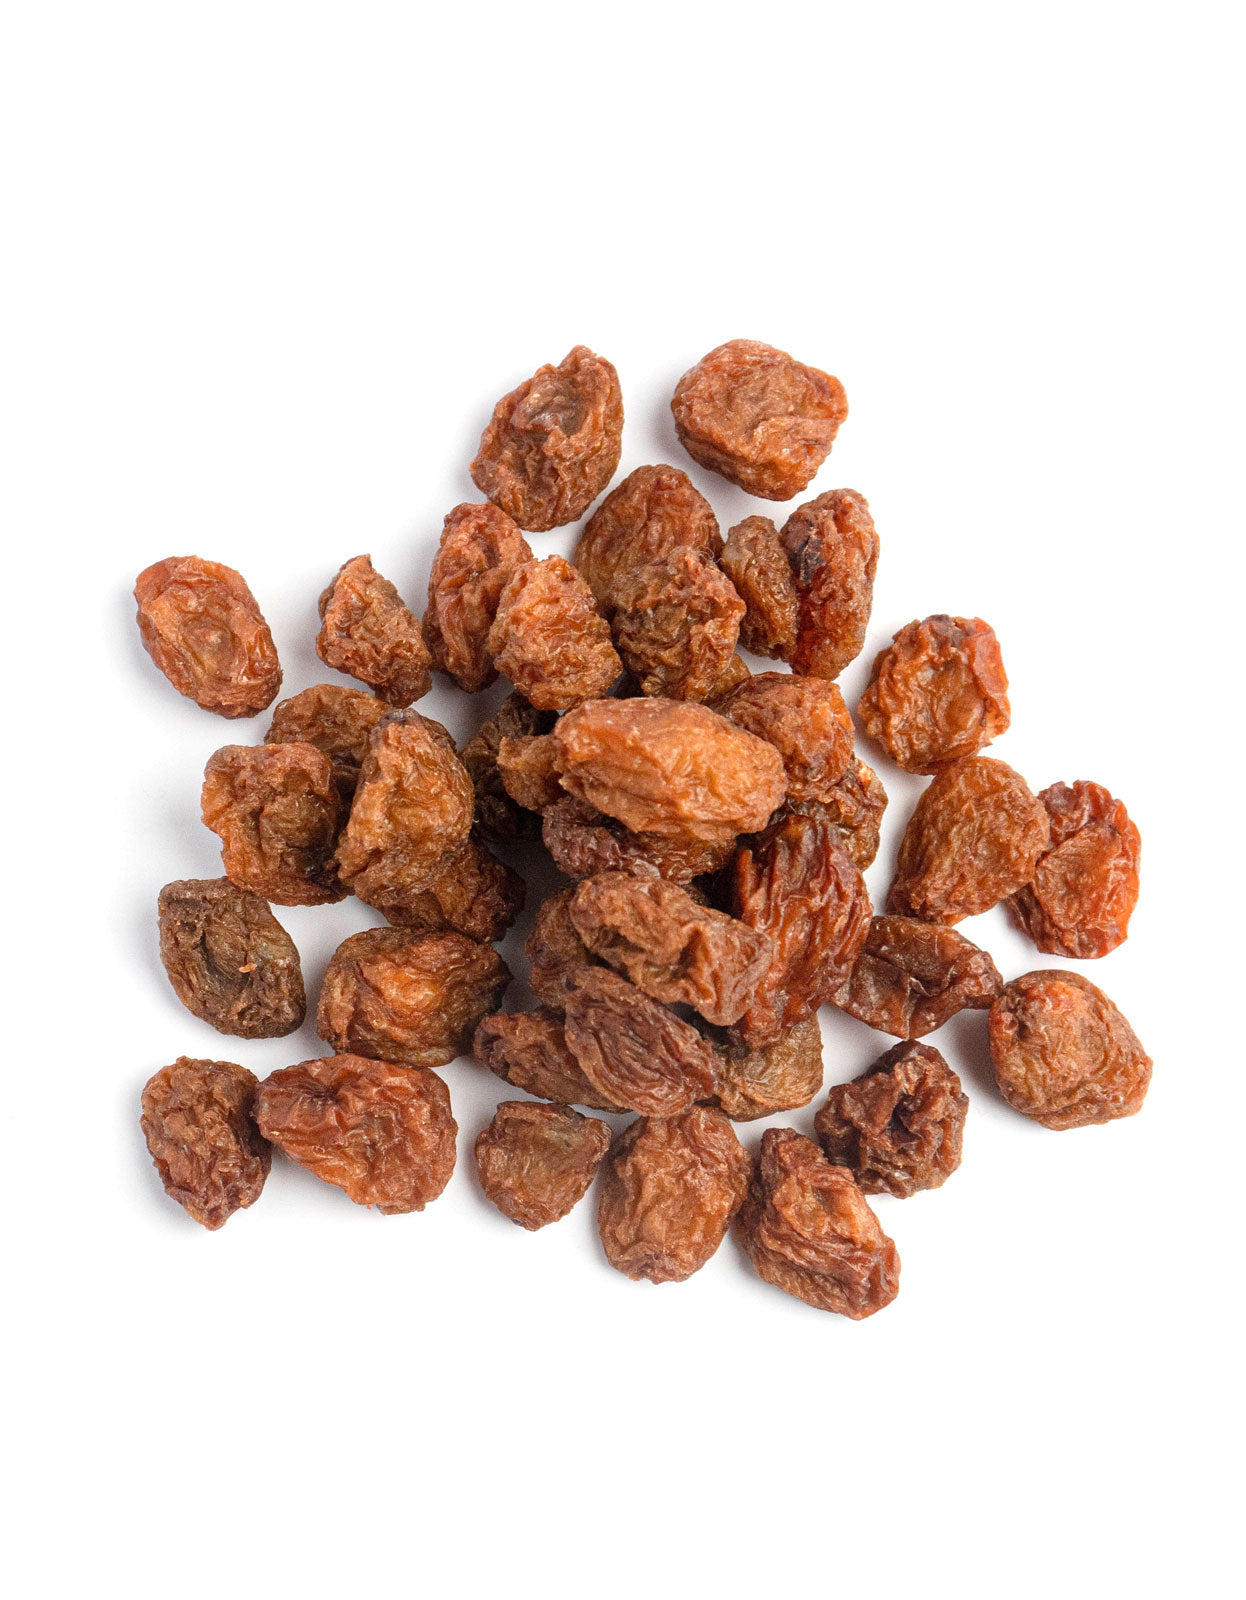 Monukka Raisins, Certified Organic - 9 oz